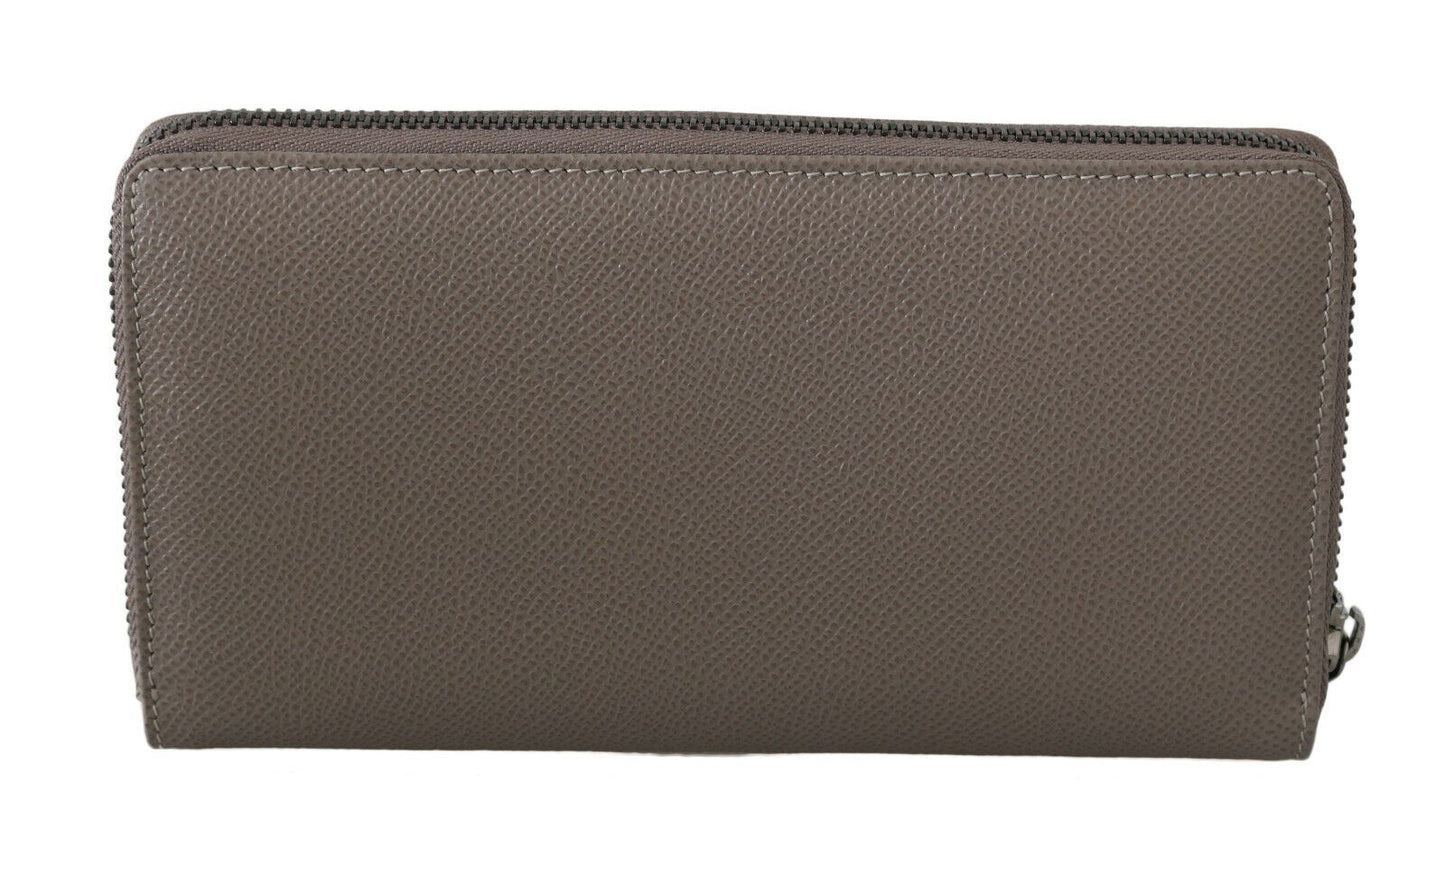 Dolce & Gabbana Beige Continental Zip Leather Wallet